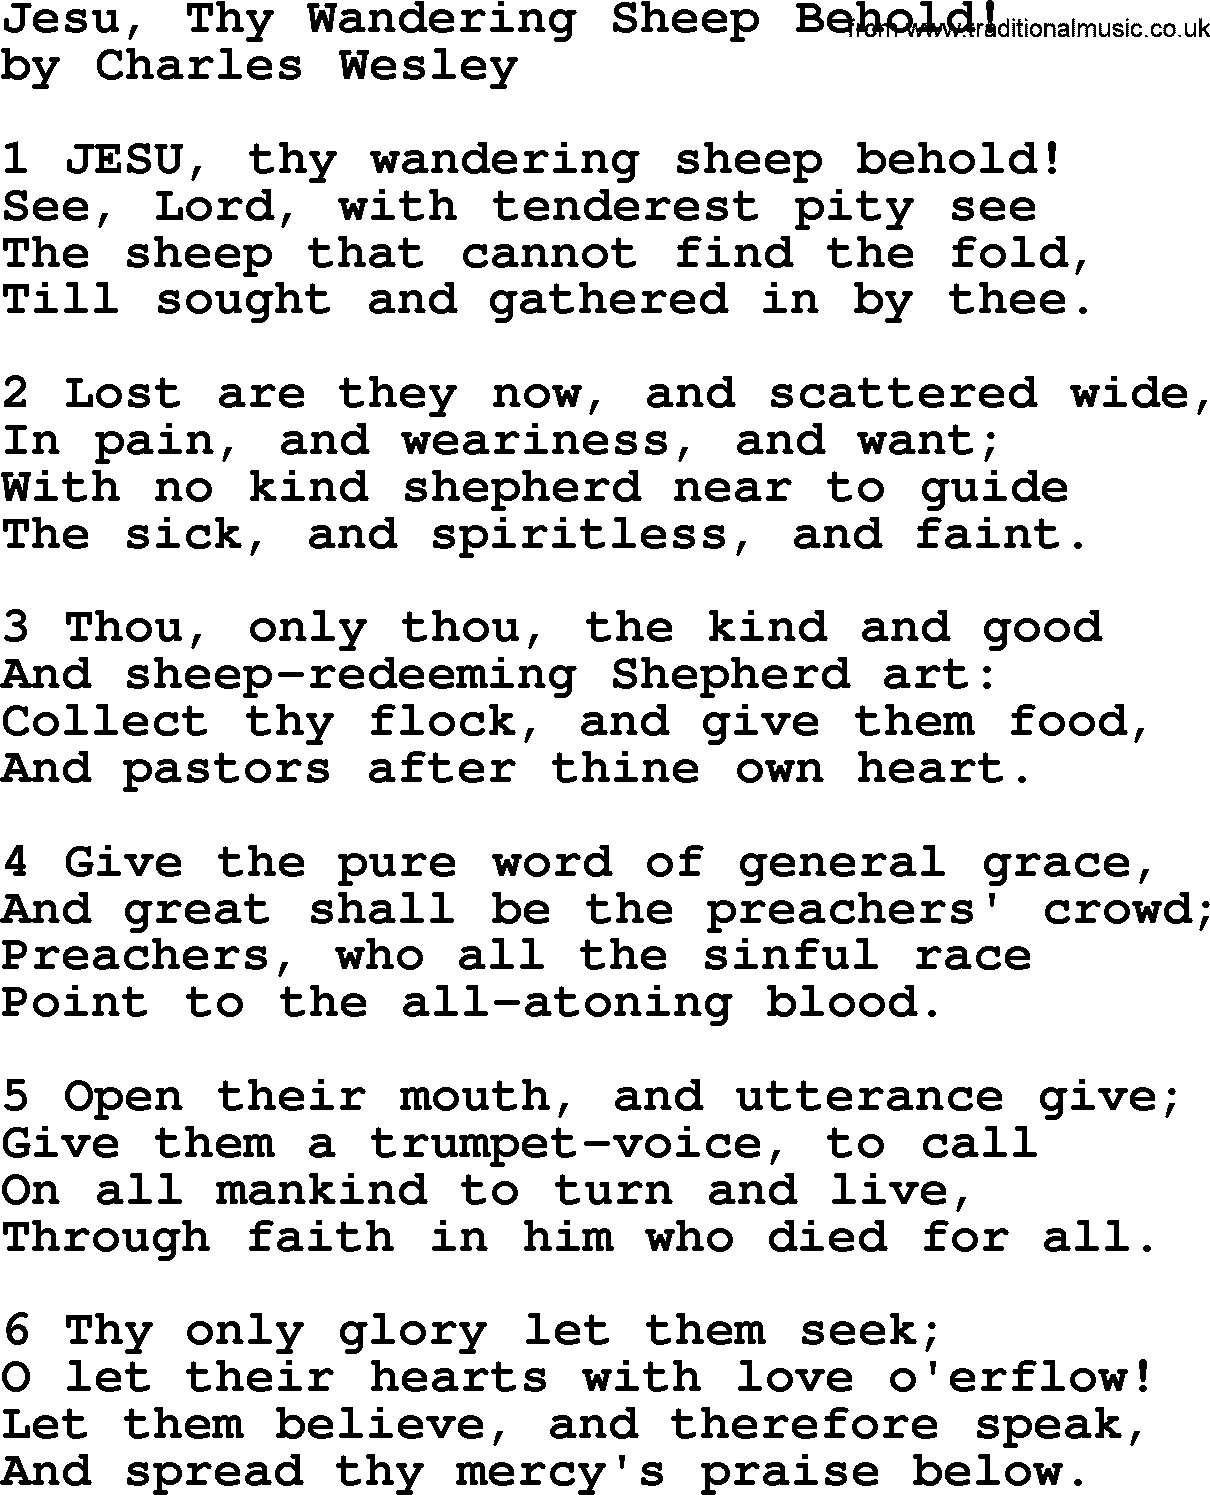 Charles Wesley hymn: Jesu, Thy Wandering Sheep Behold!, lyrics